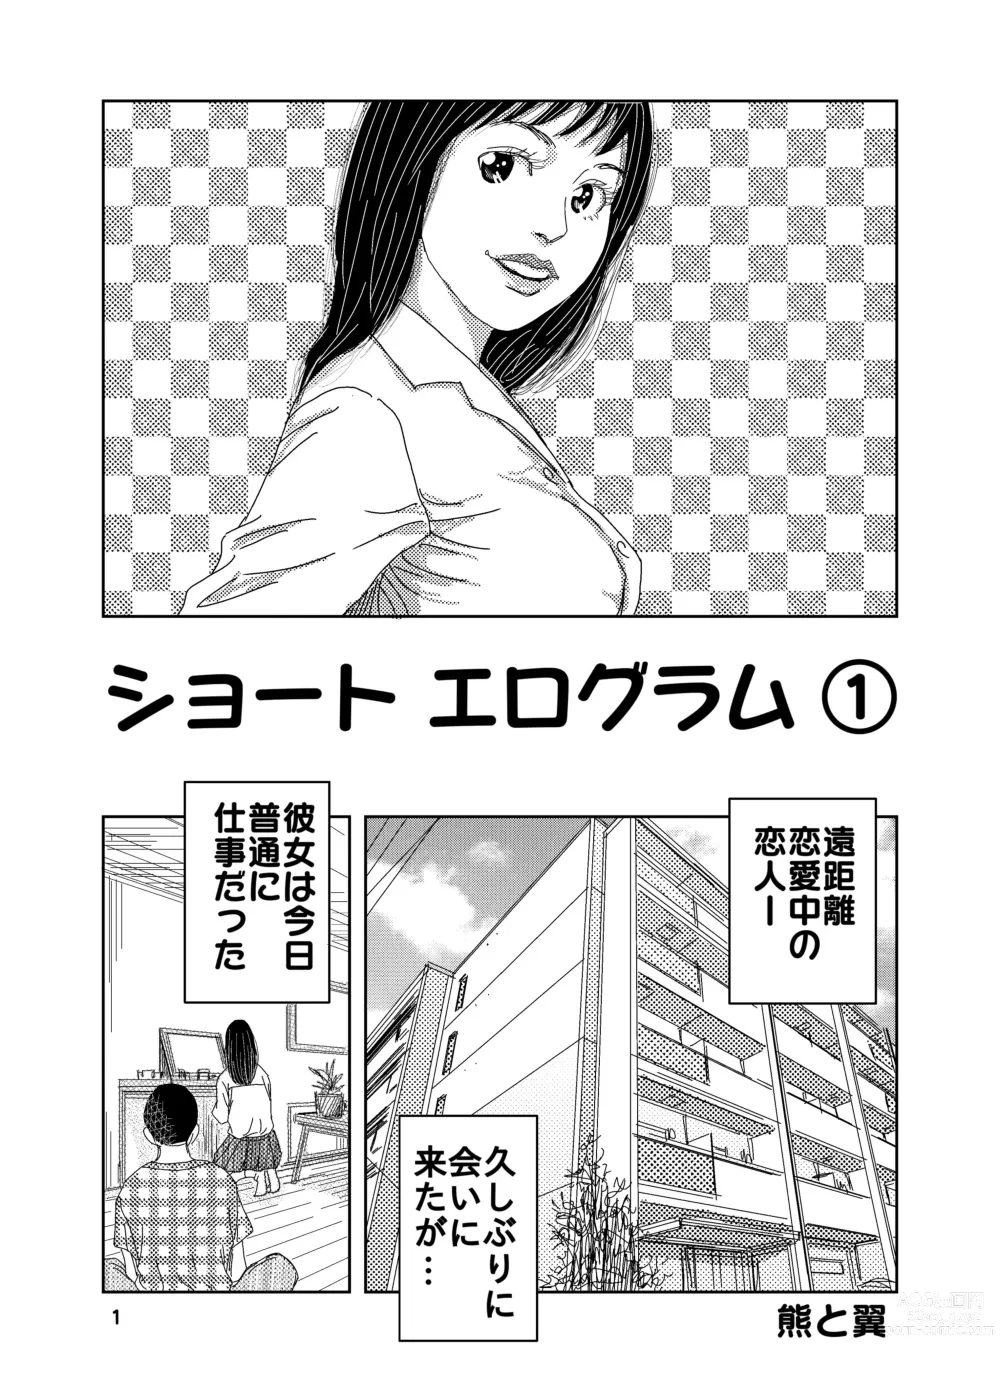 Page 1 of doujinshi Short Erogram